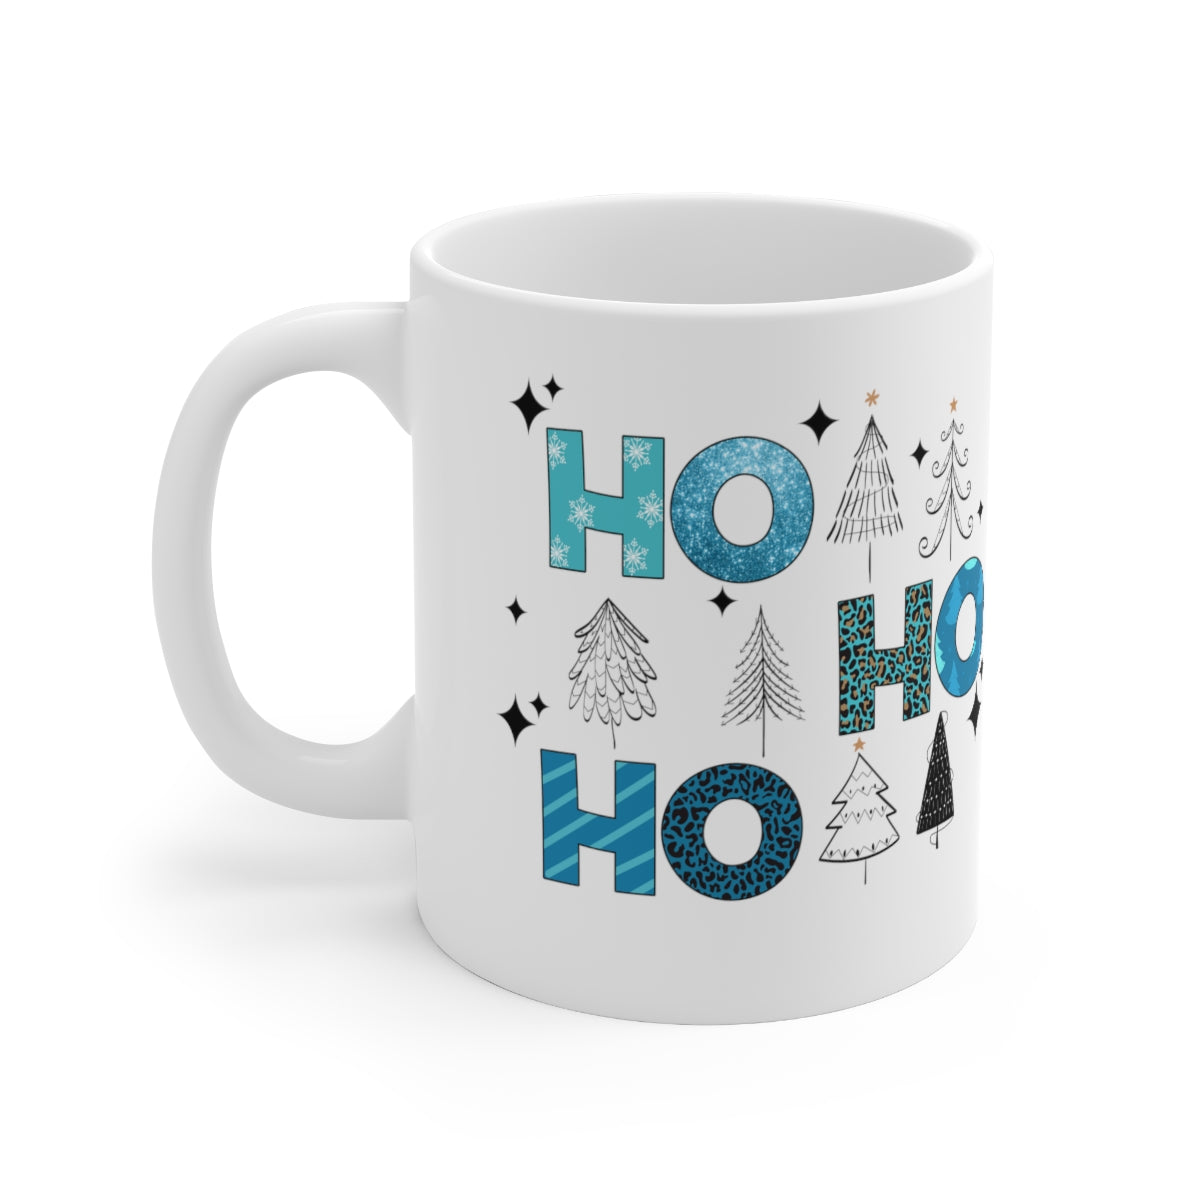 Ho Ho Ho Christmas Winter Ceramic Mug